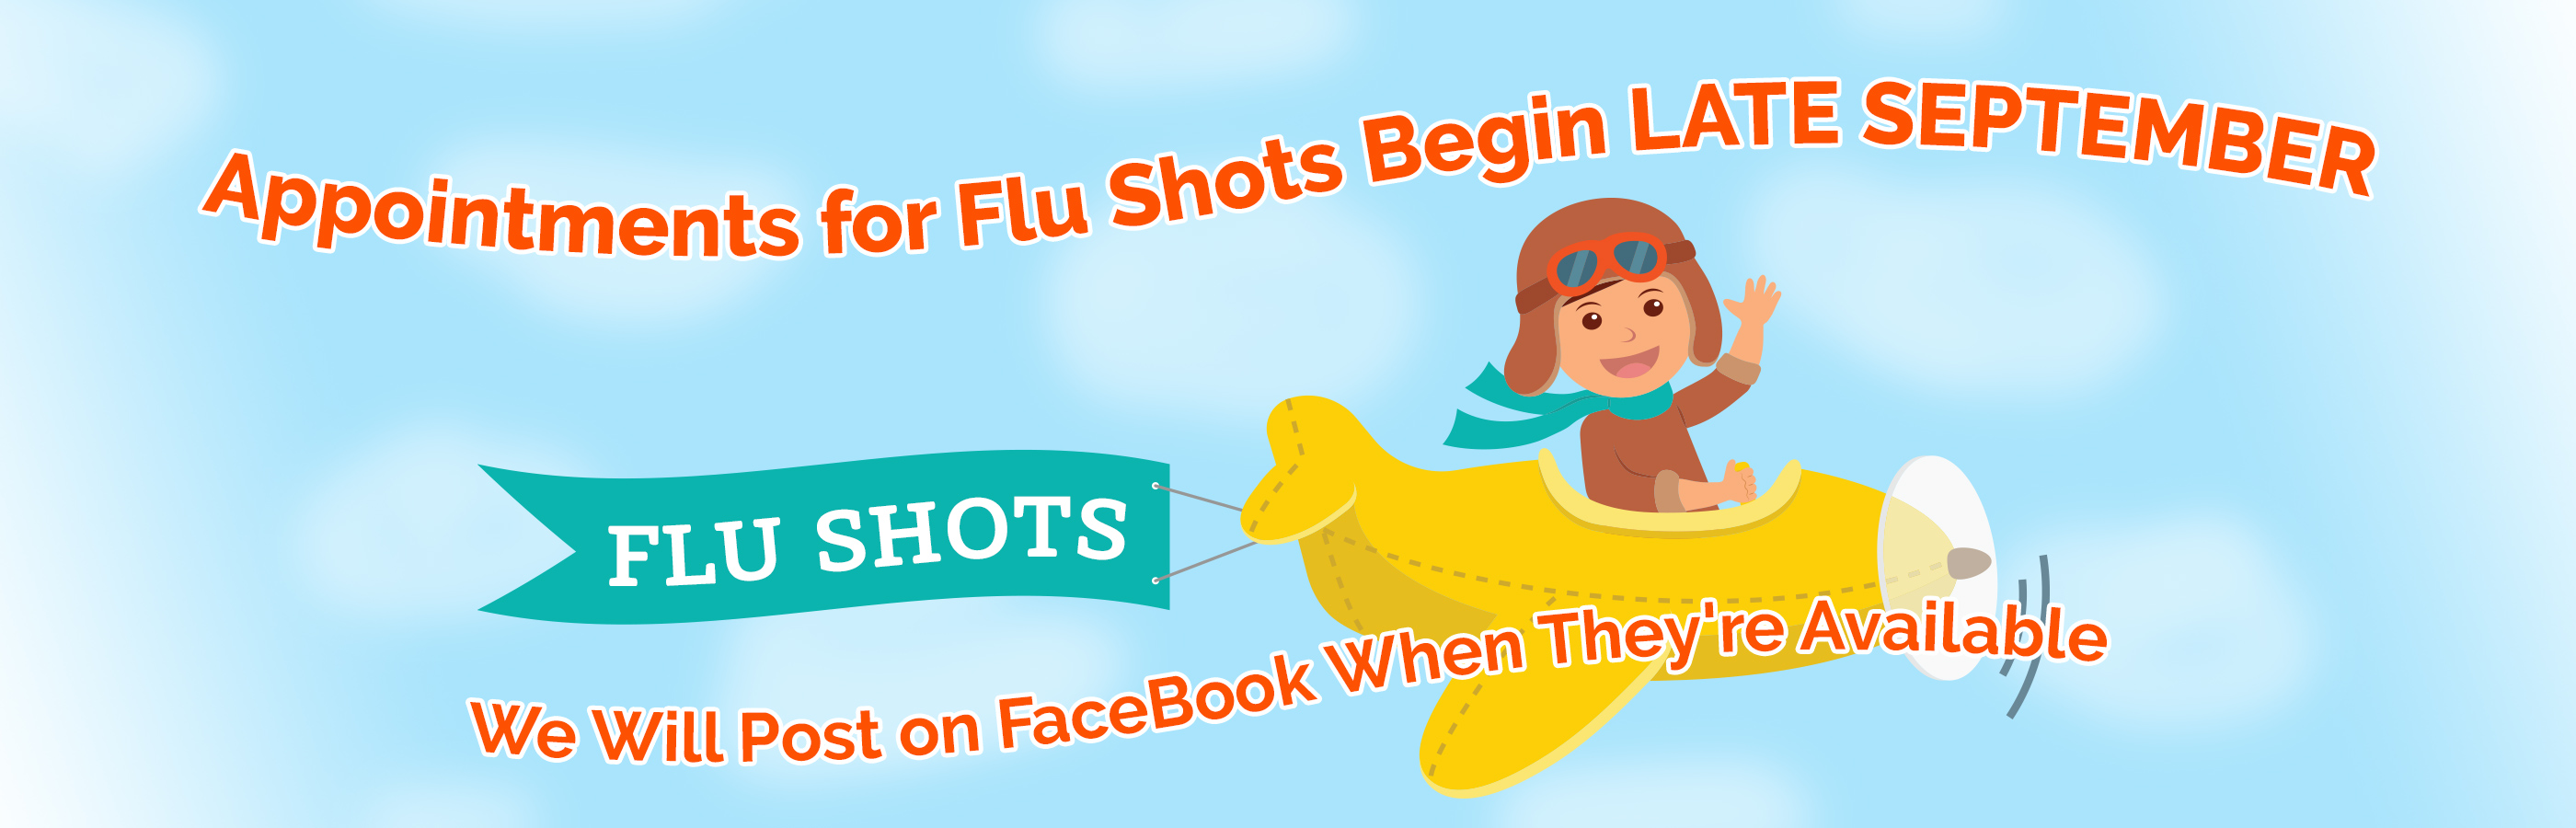 Flu Shot Teaser